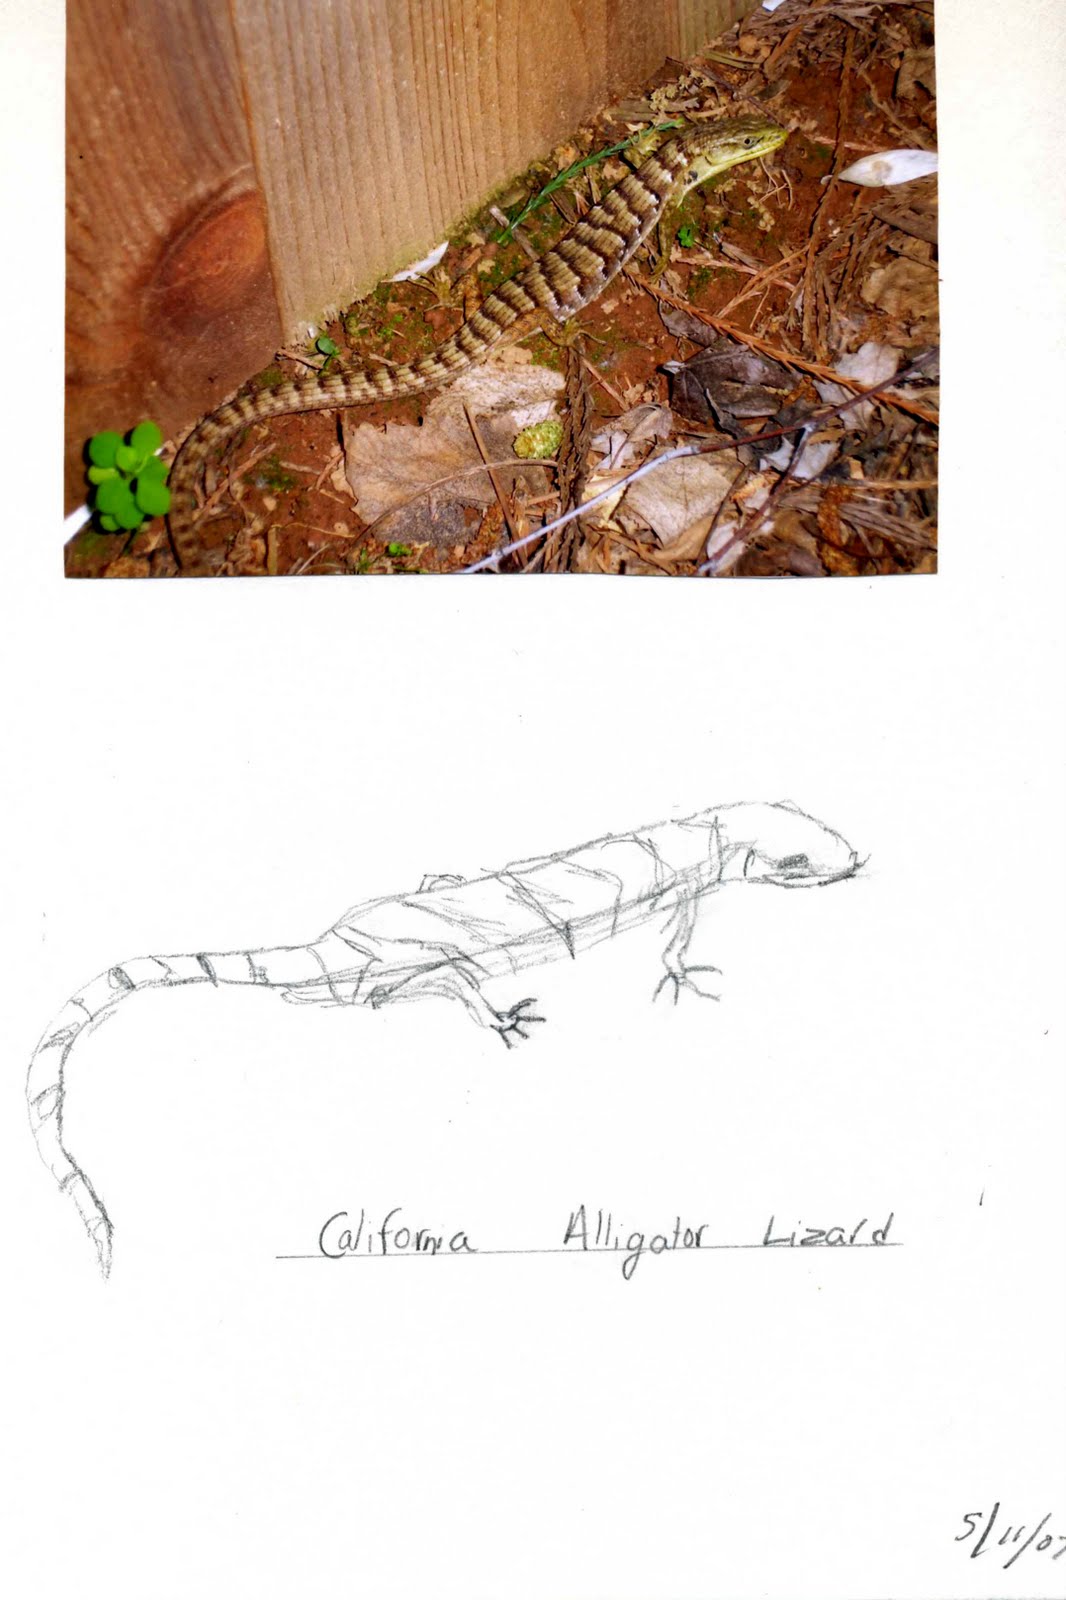 CA Alligator lizard nature journal